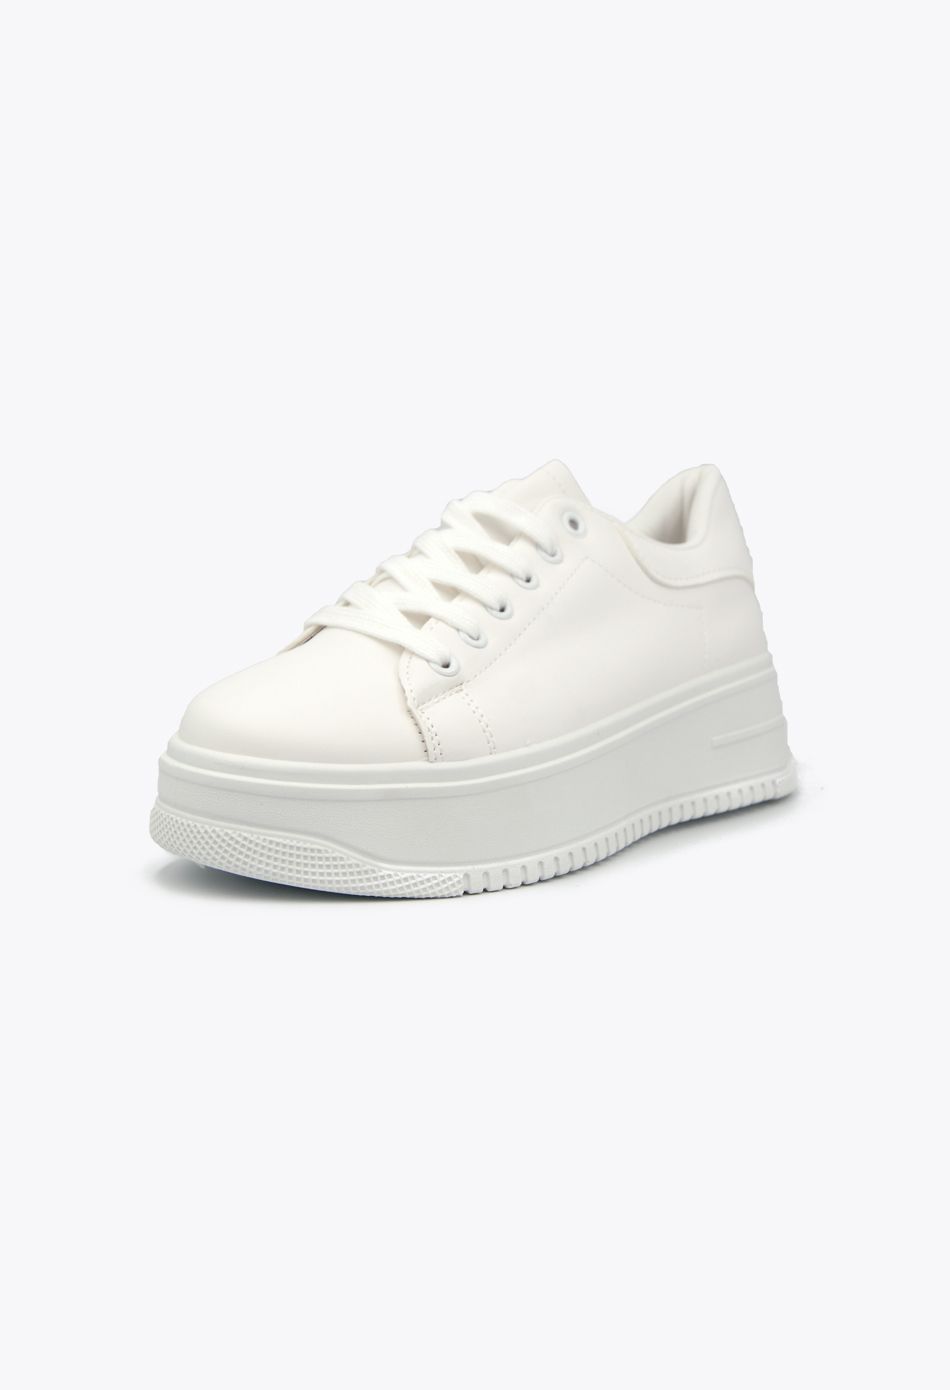 Sneakers Δίσολα Λευκό / LY561-white Γυναικεία Αθλητικά και Sneakers joya.gr